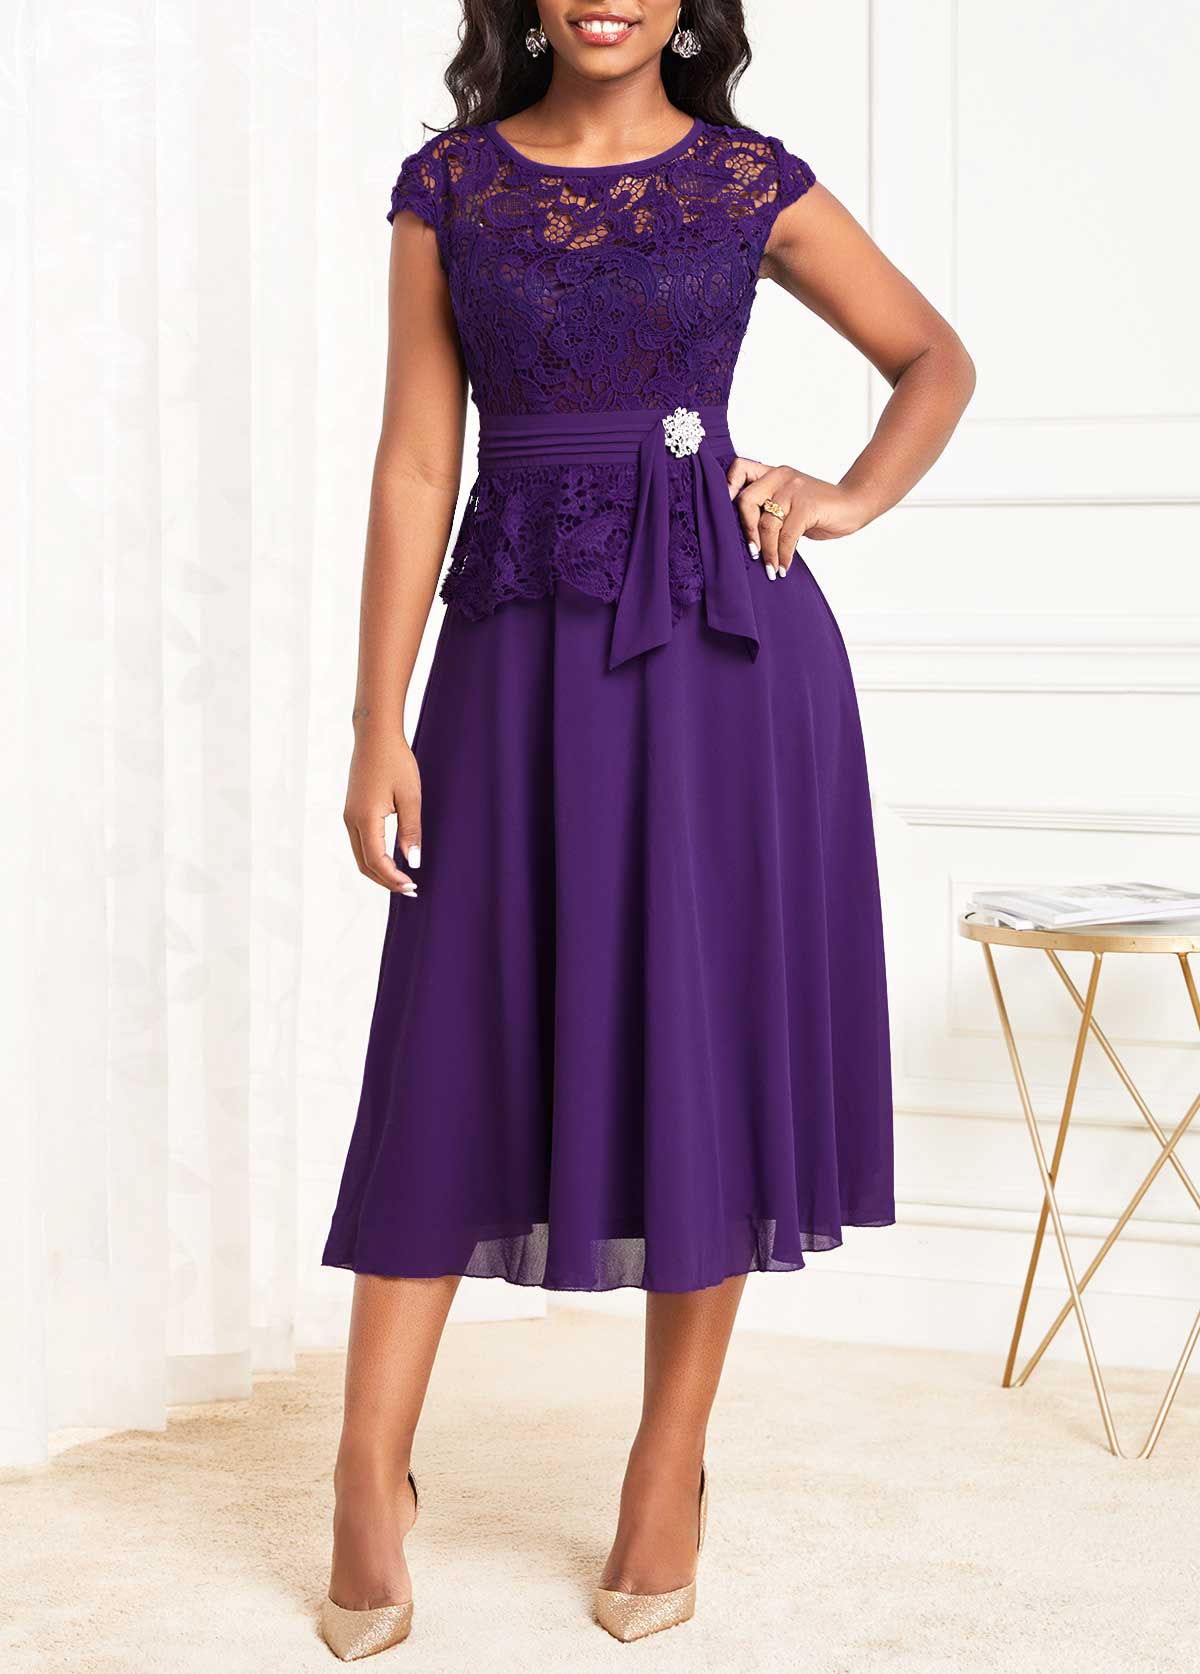 Lace Round Neck Purple Cap Sleeve Dress